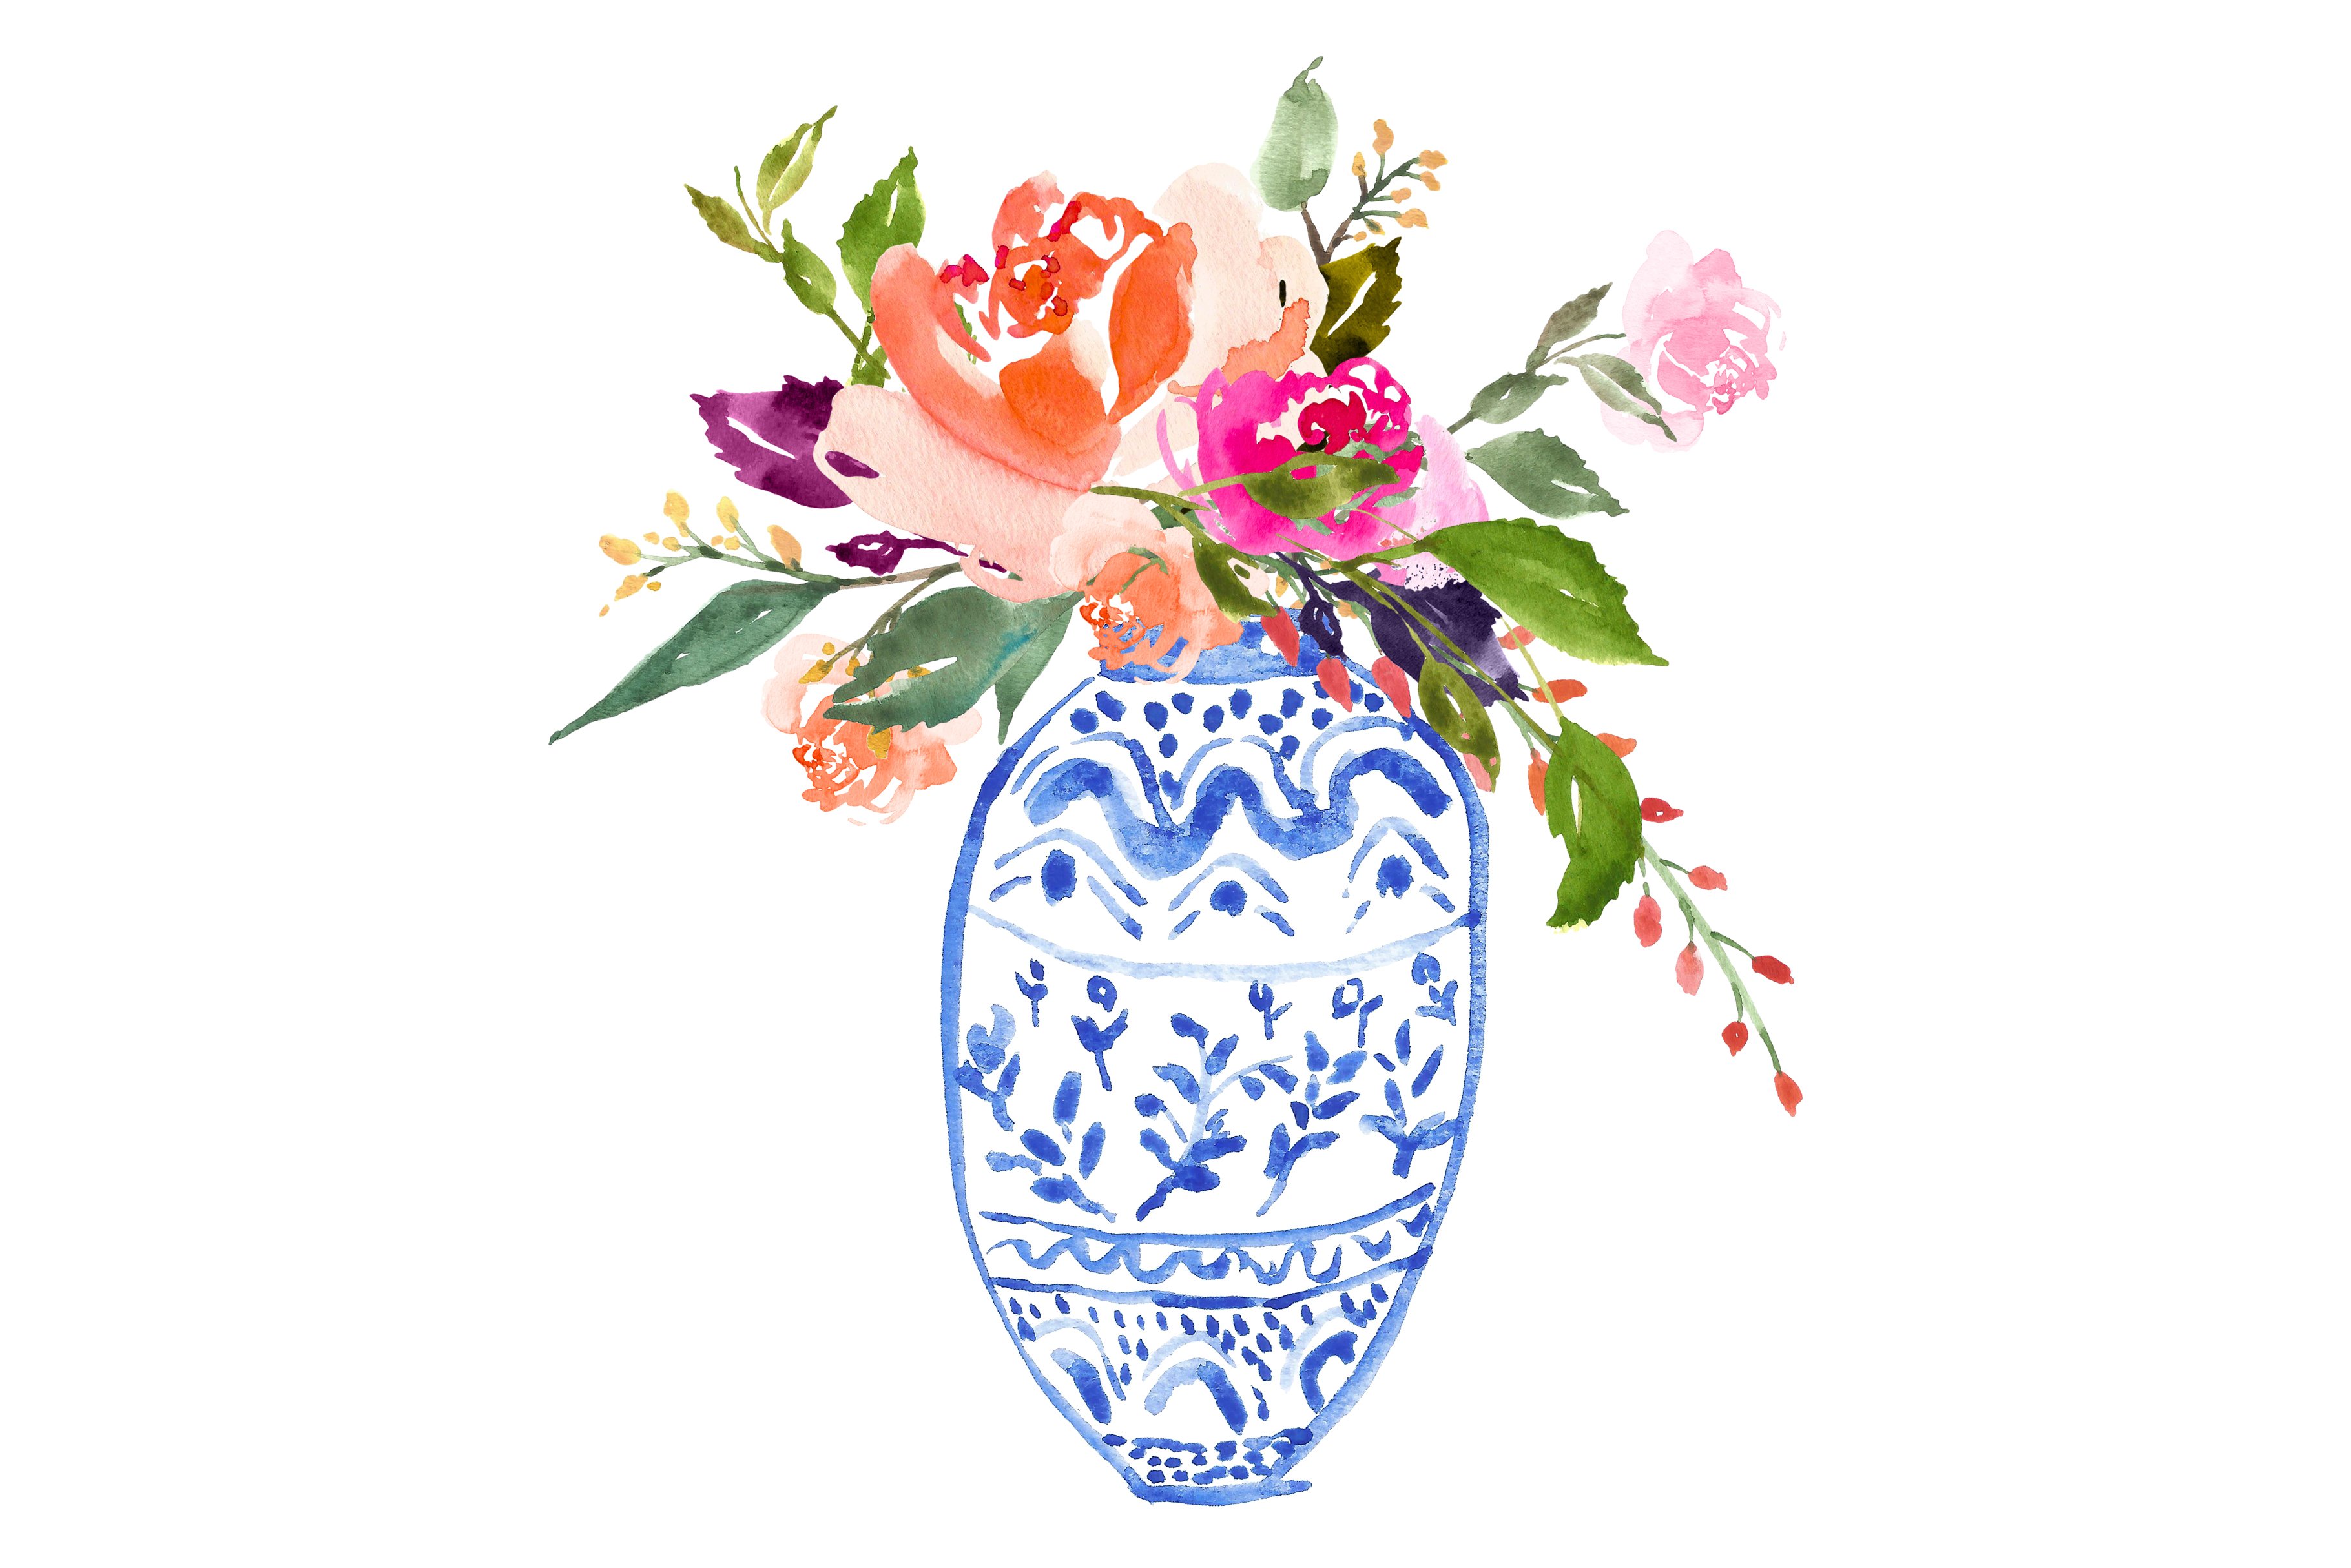 Watercolour Bouquet in Vase - No.1 cover image.